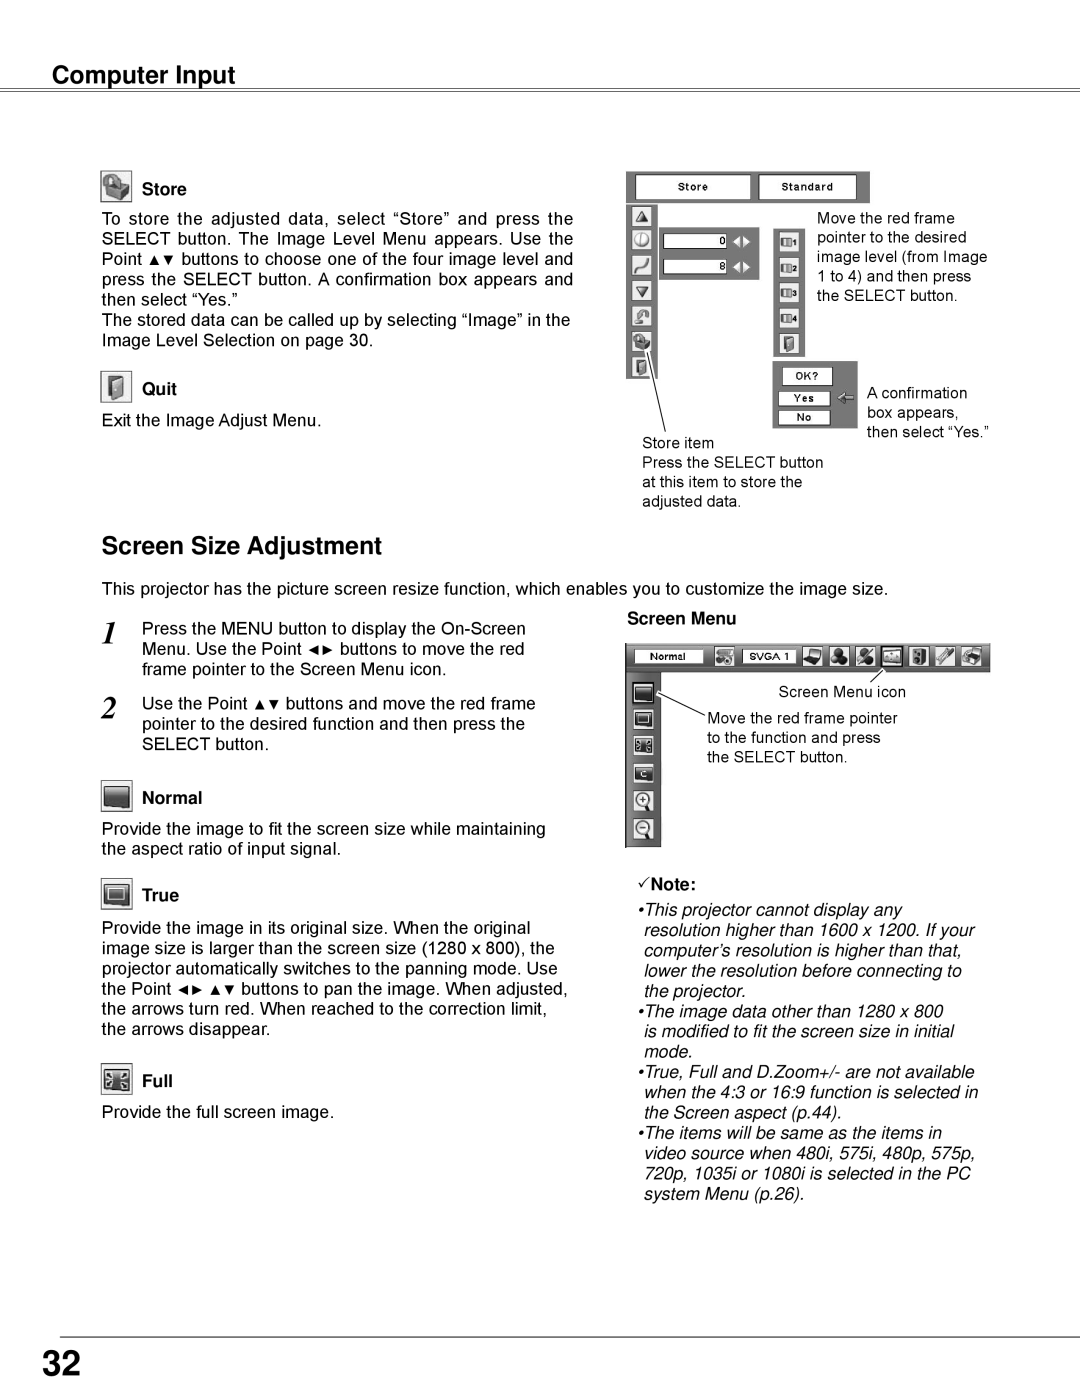 Sanyo PLC-WXE45 owner manual Screen Size Adjustment, Computer Input, Store, Quit, Normal, True, Full, Screen Menu, Note 